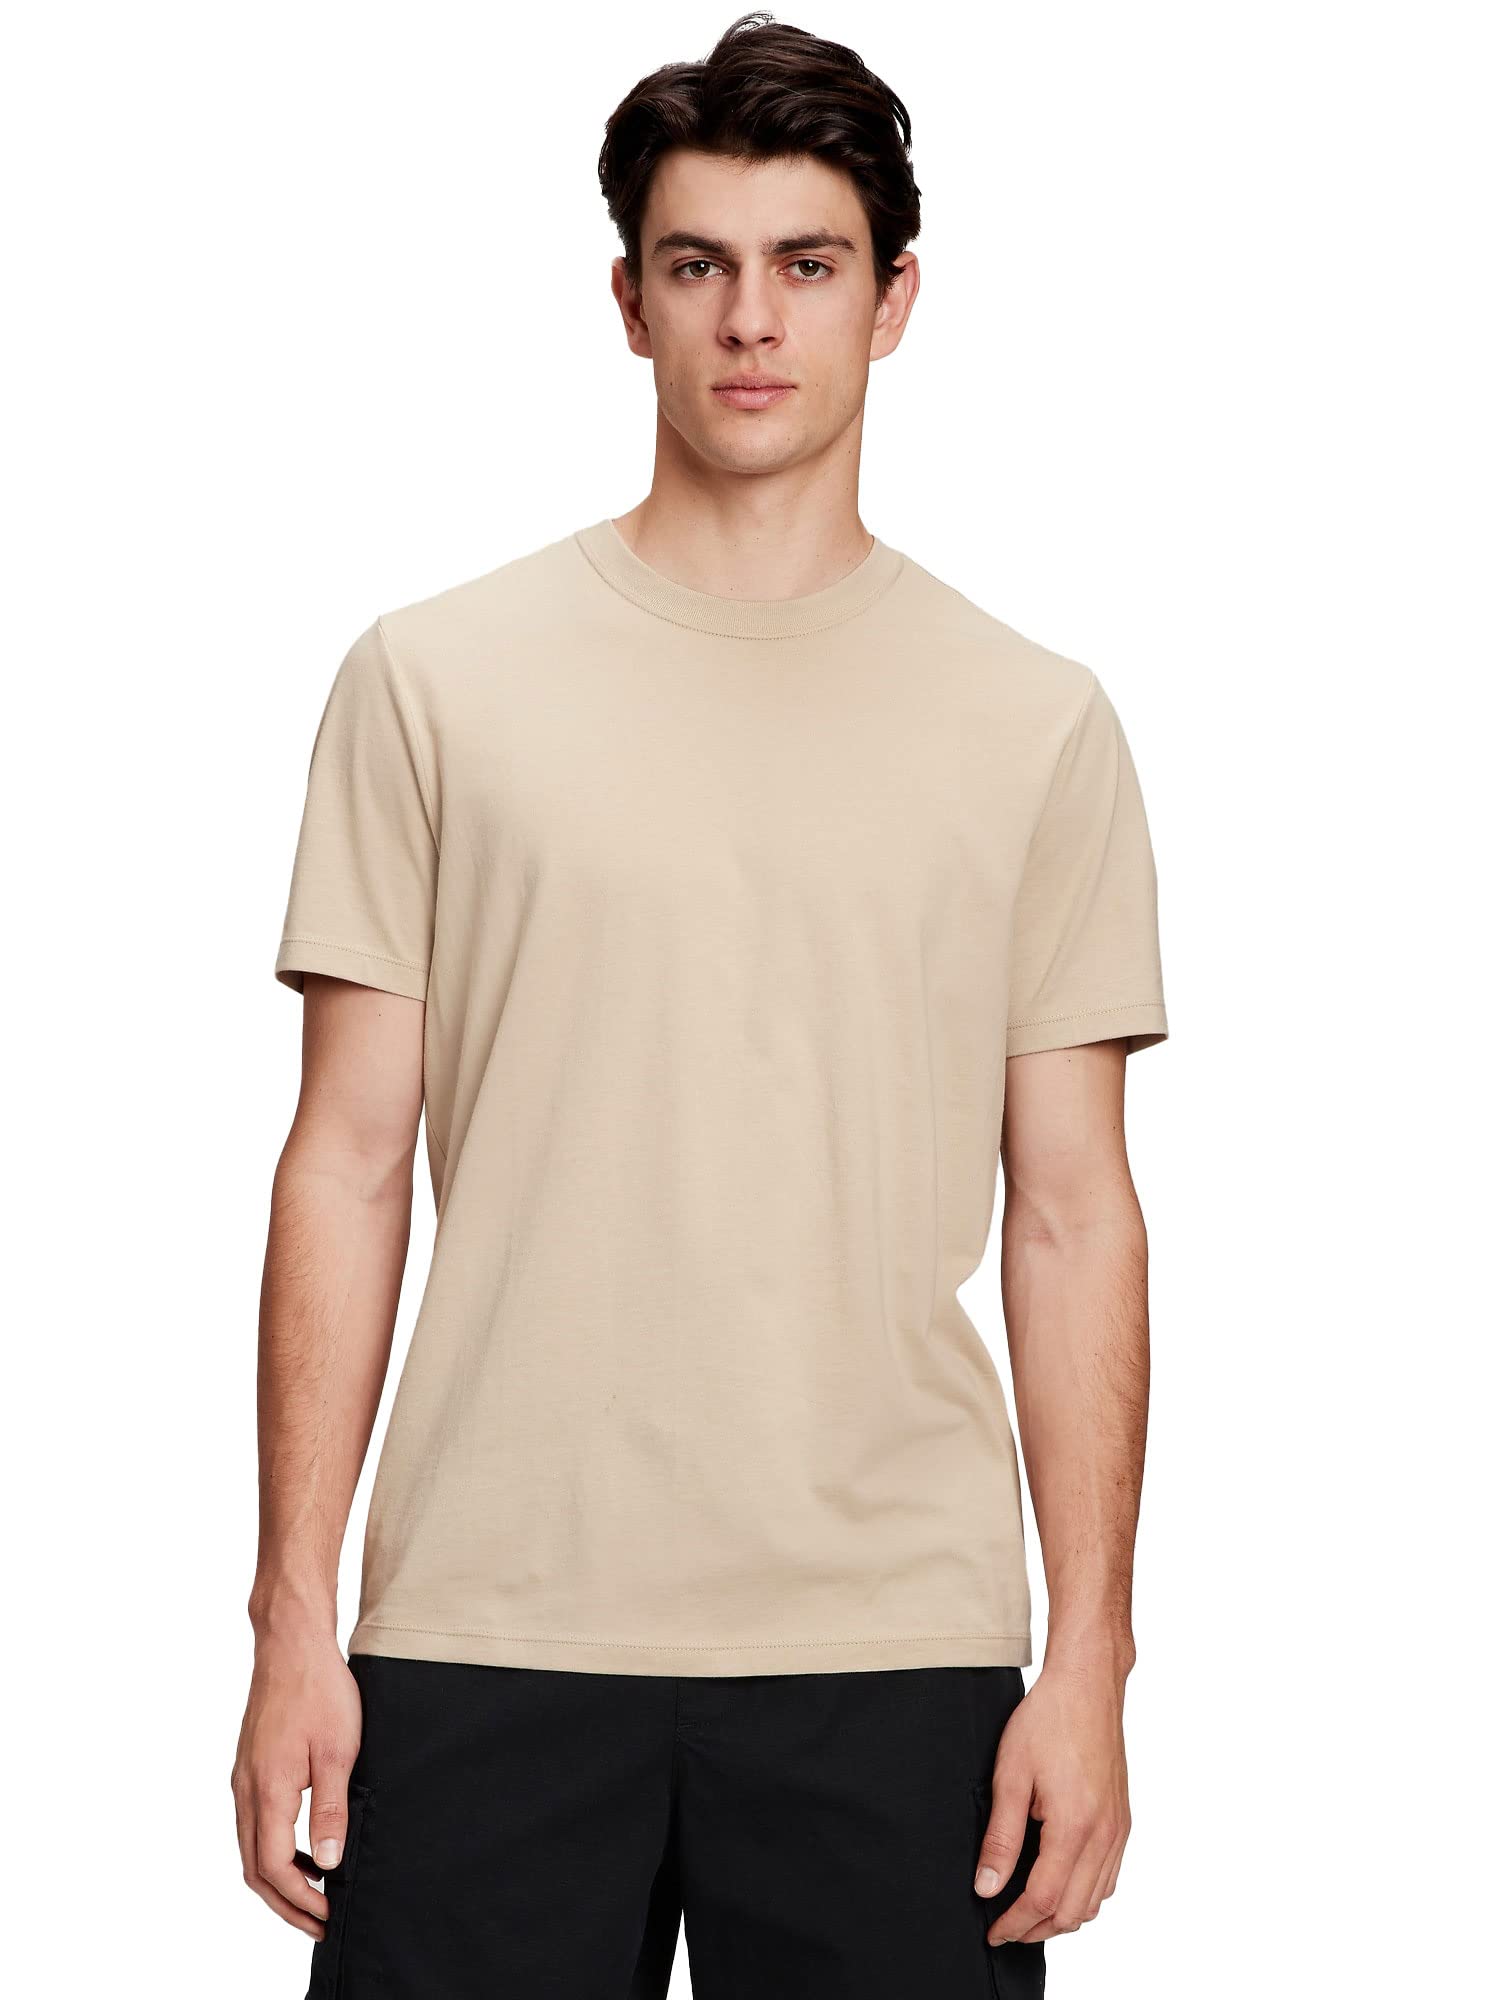 GAP Men's Everyday Soft Crewneck T-Shirt Tee